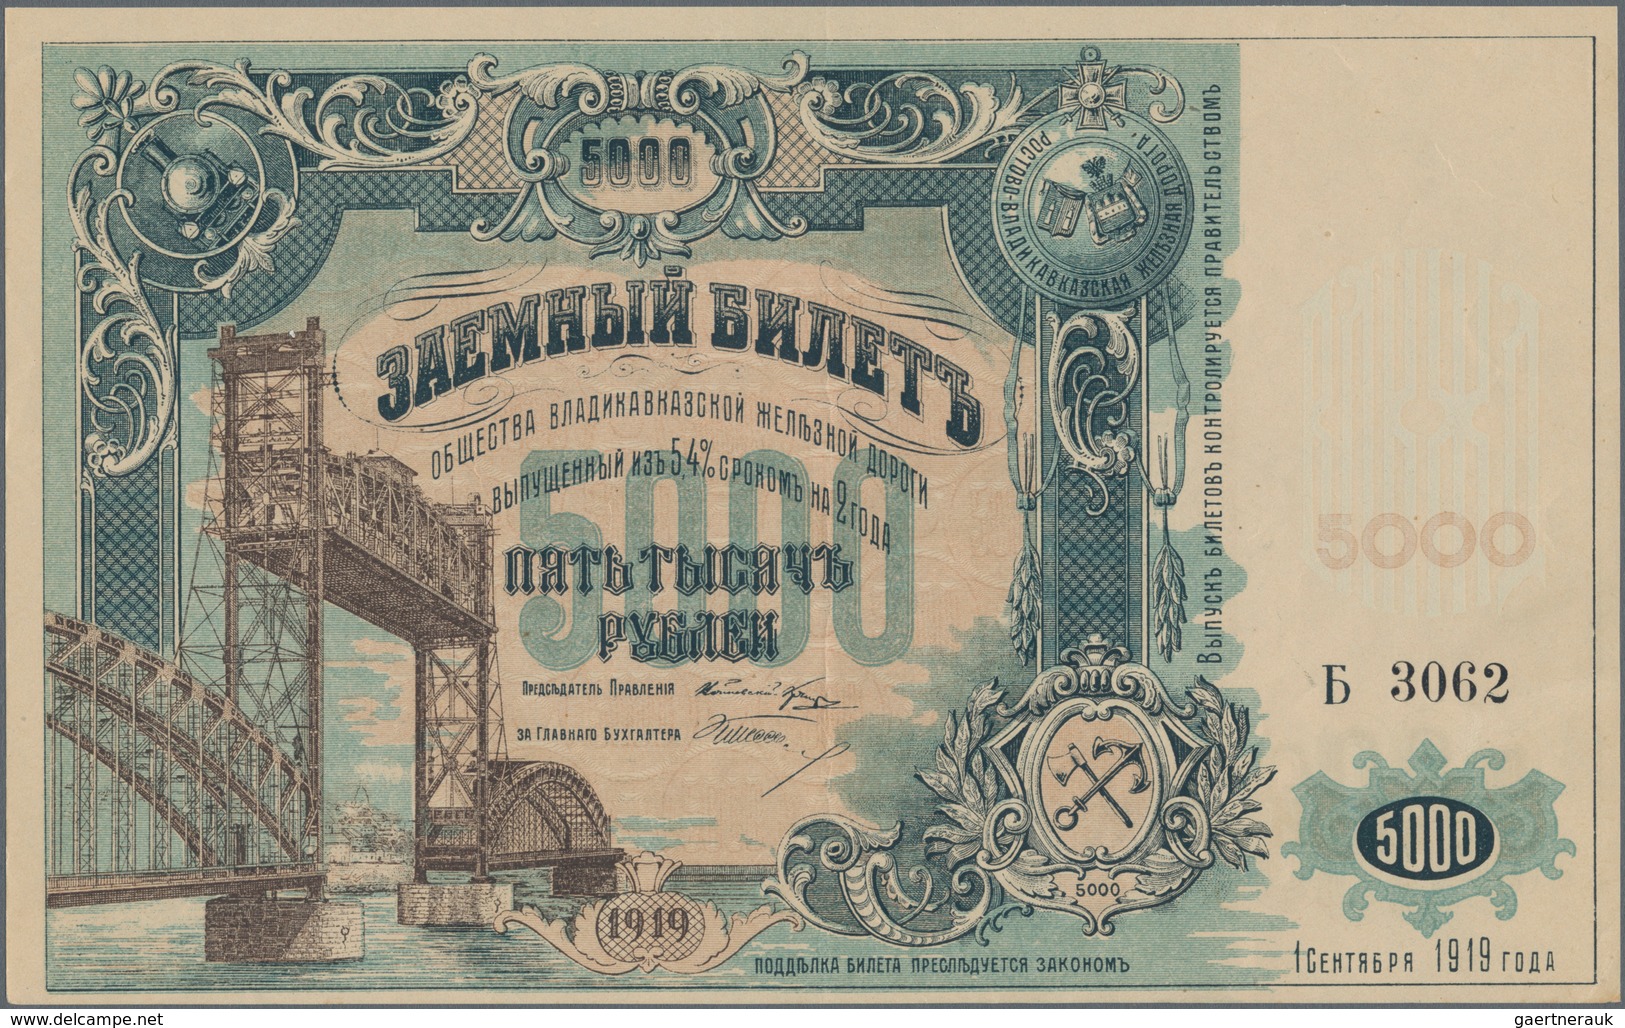 Russia / Russland: North Caucasus 5000 Rubles 1919, P.S598, Almost Perfect Condition, Just A Few Tin - Russia